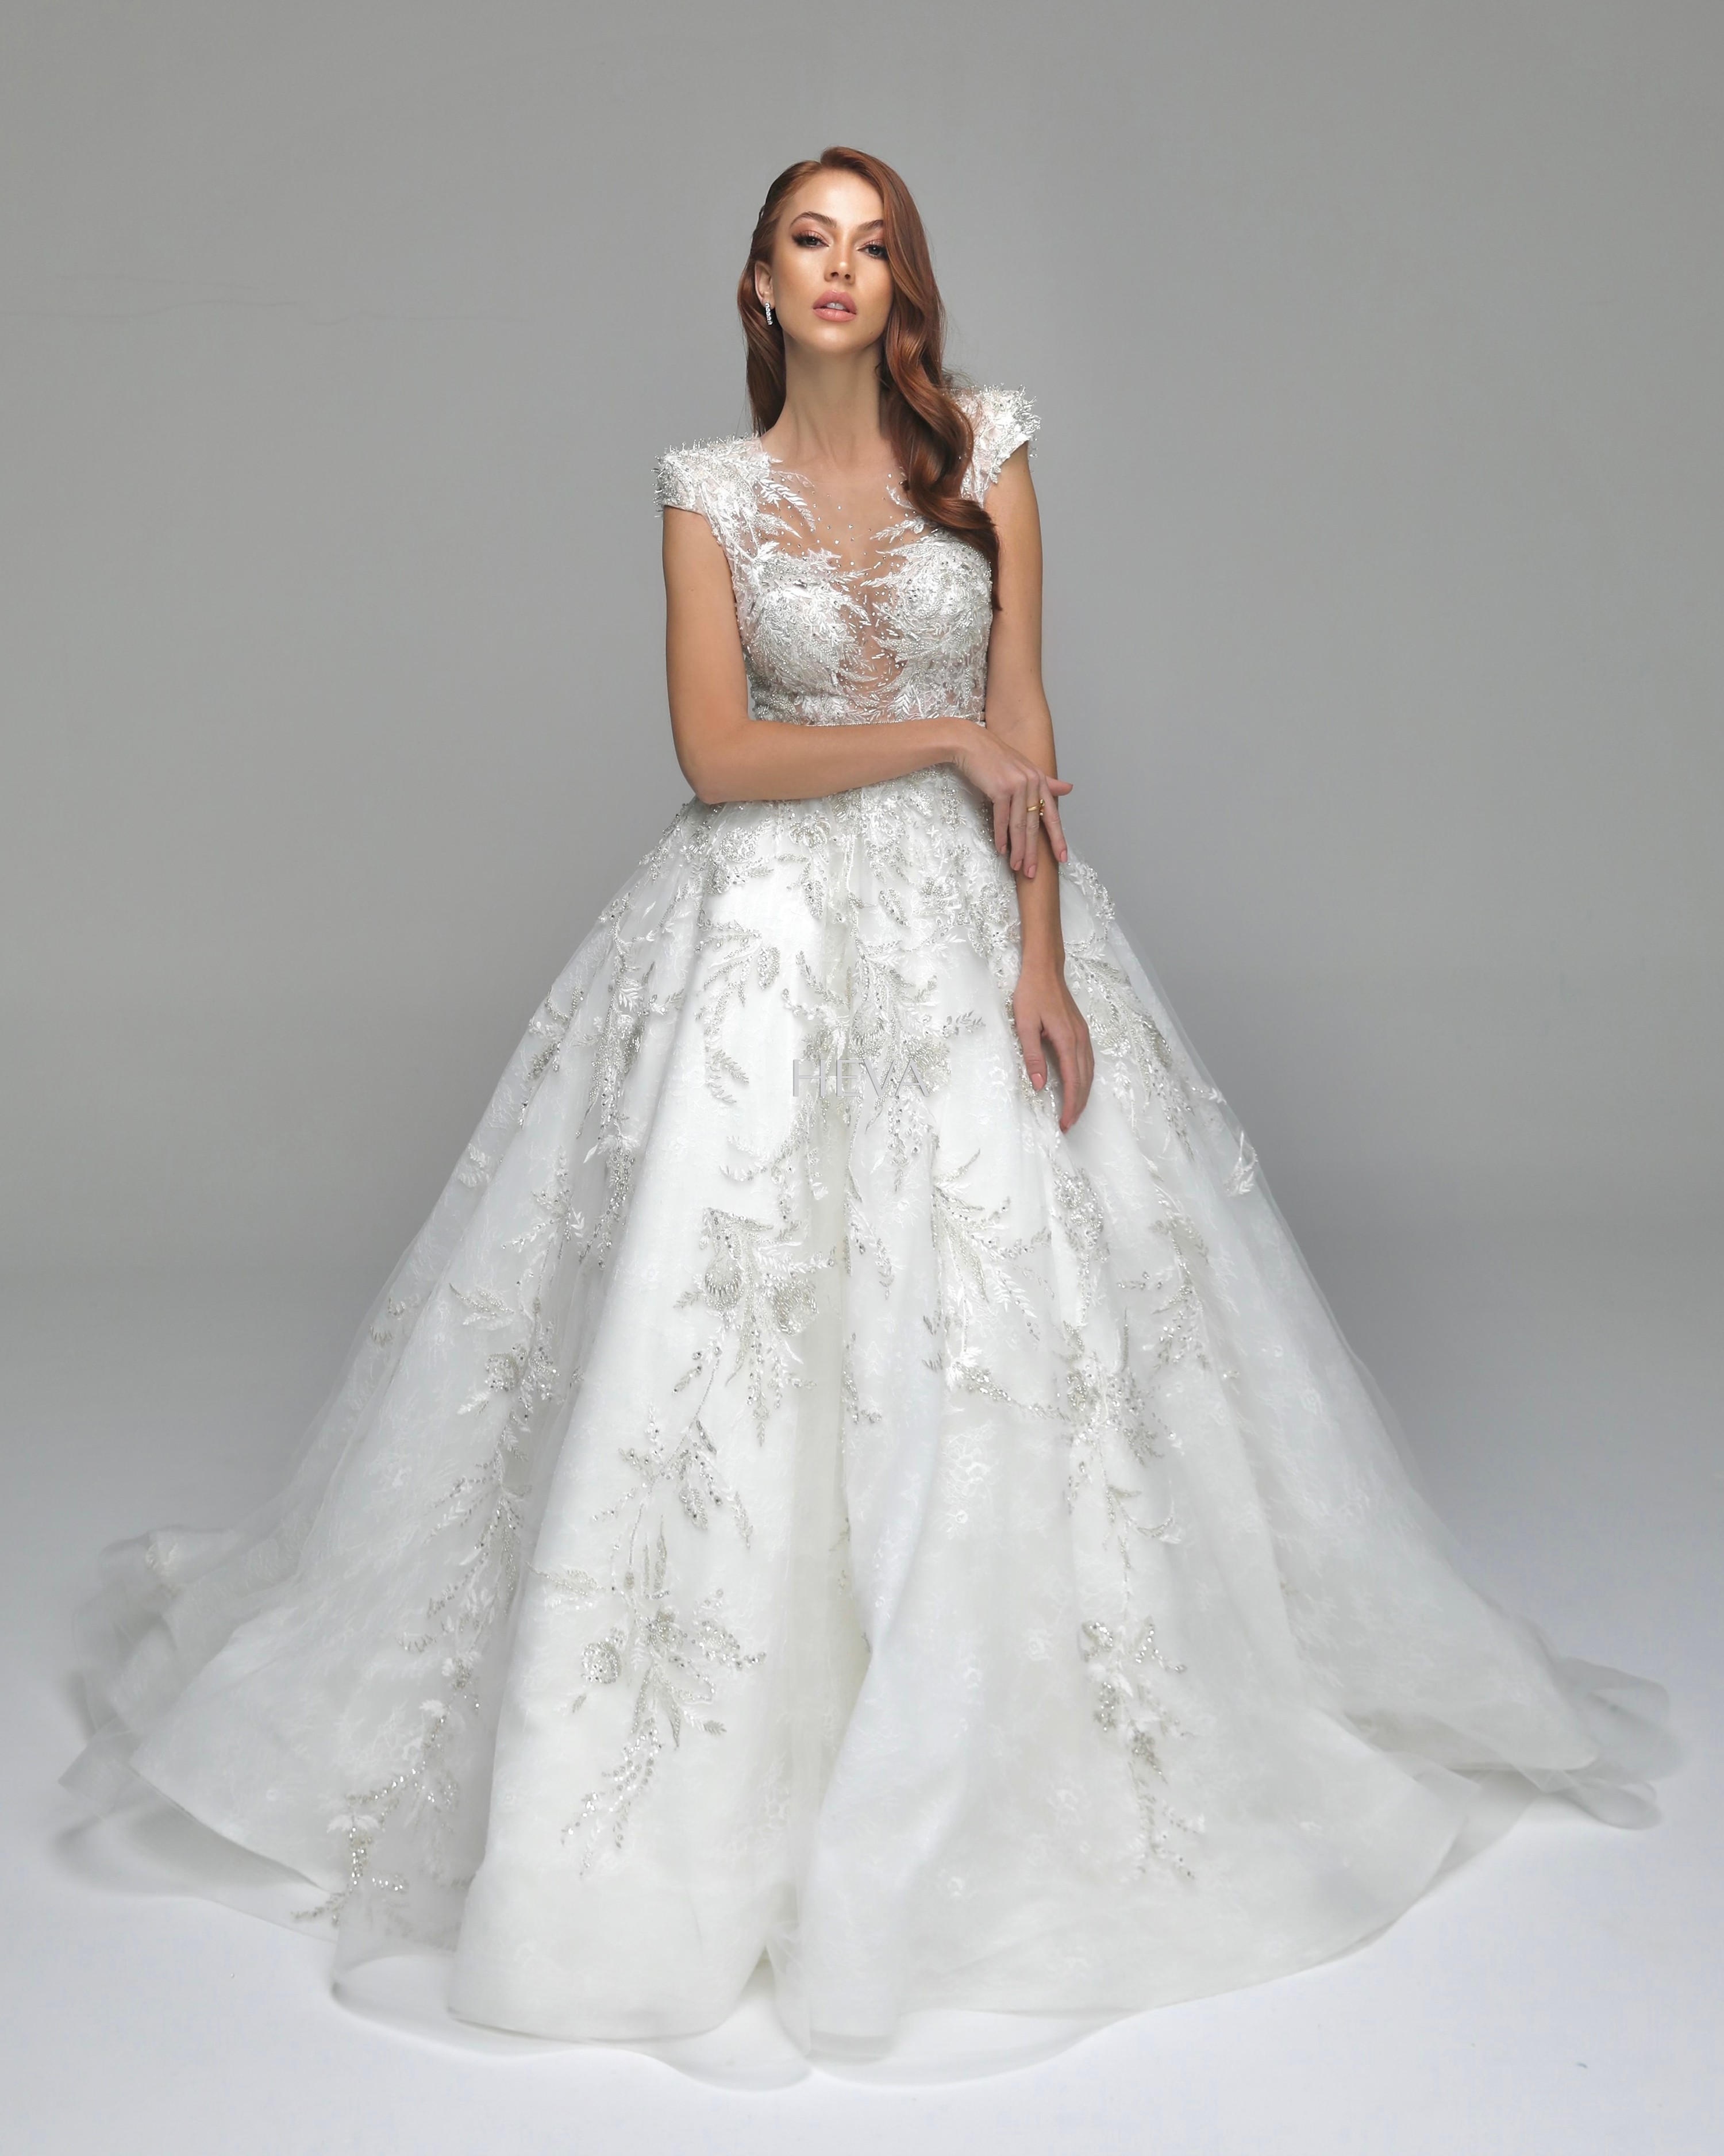 HEVA - Collection LookBook - Bridal Wedding Gown 2022-2023